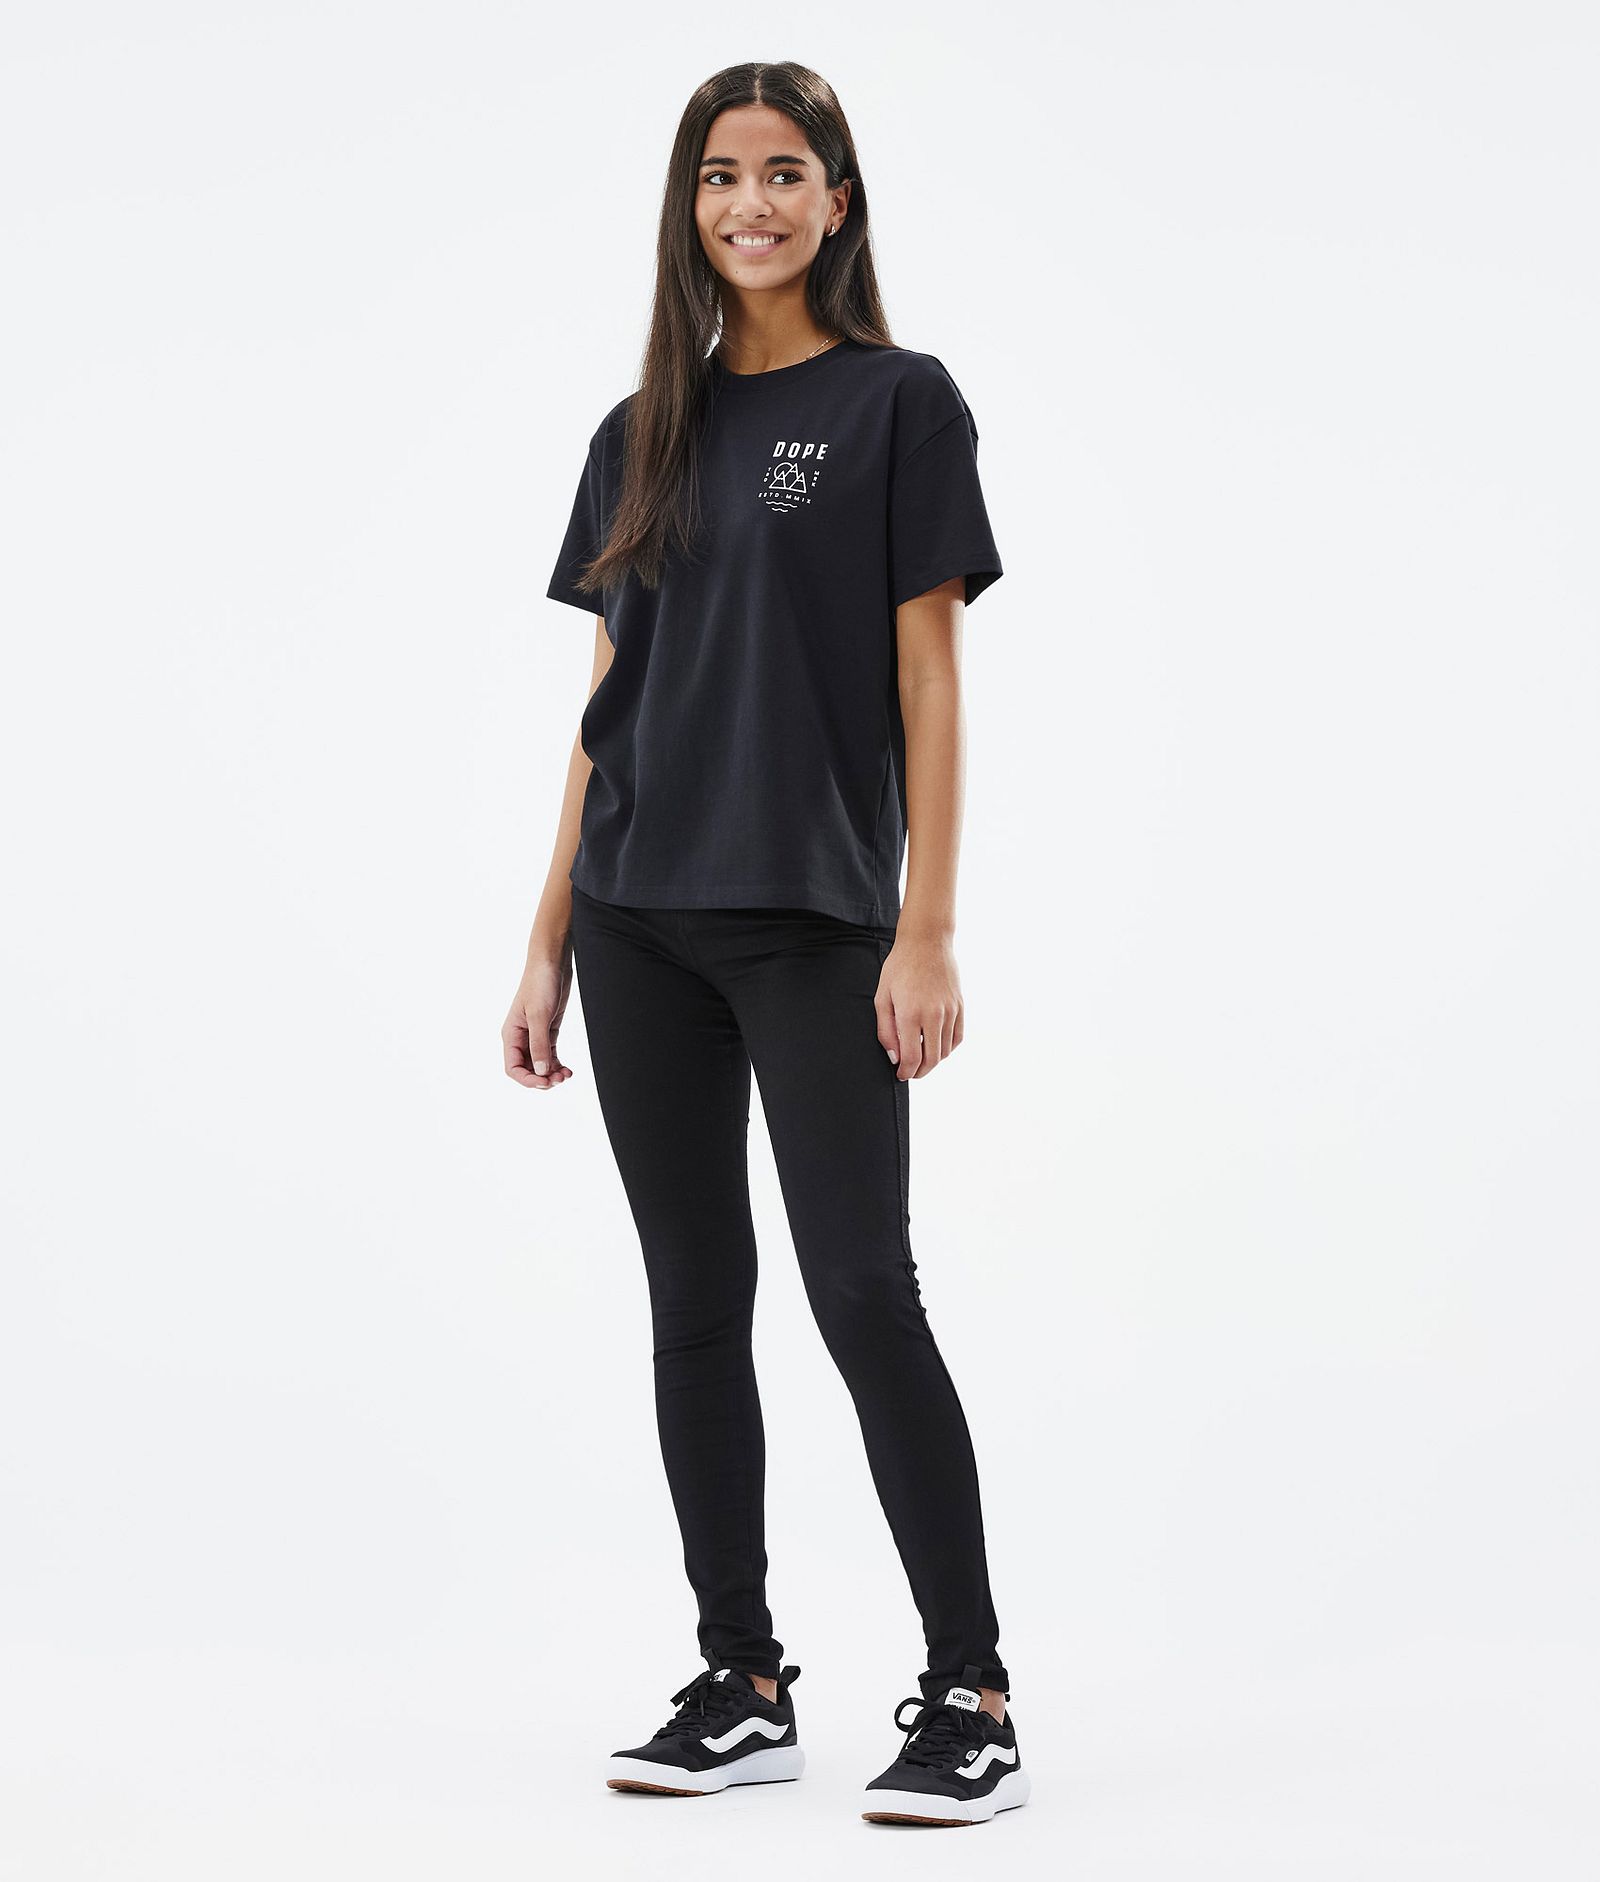 Dope Standard W 2022 Camiseta Mujer Summit Black